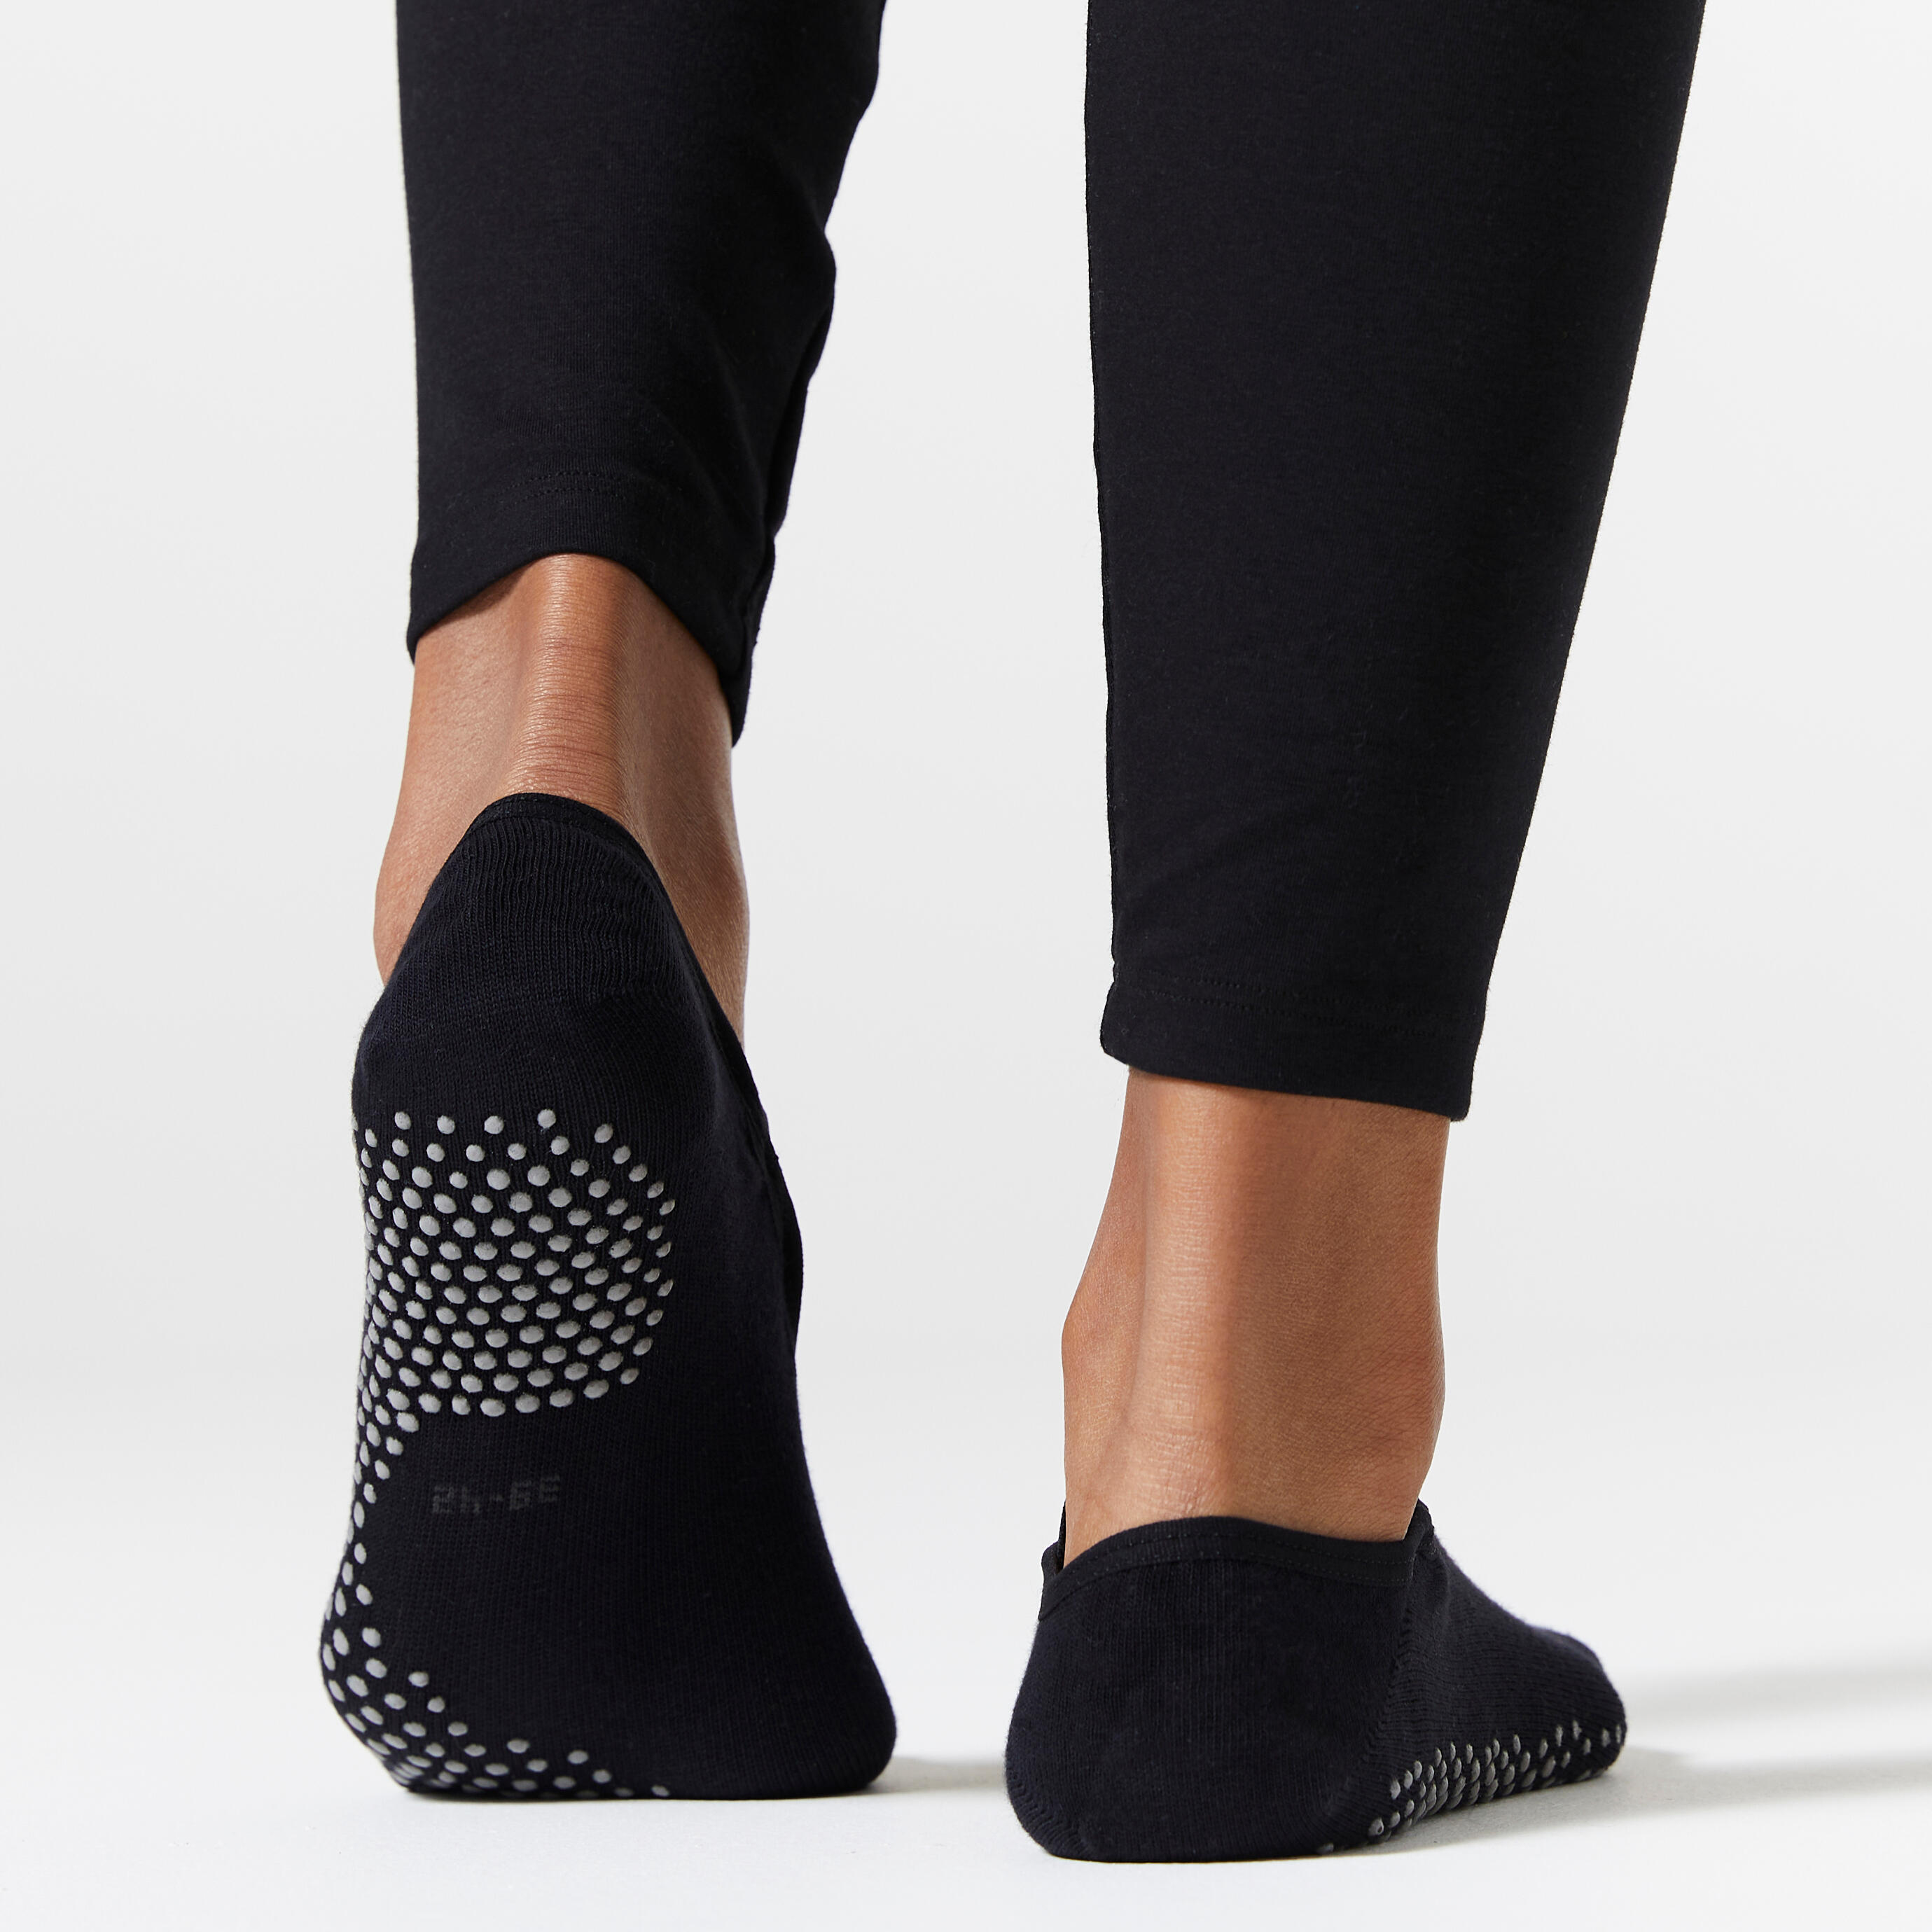 Chaussettes sport antidérapantes femme - 500 noir - DOMYOS